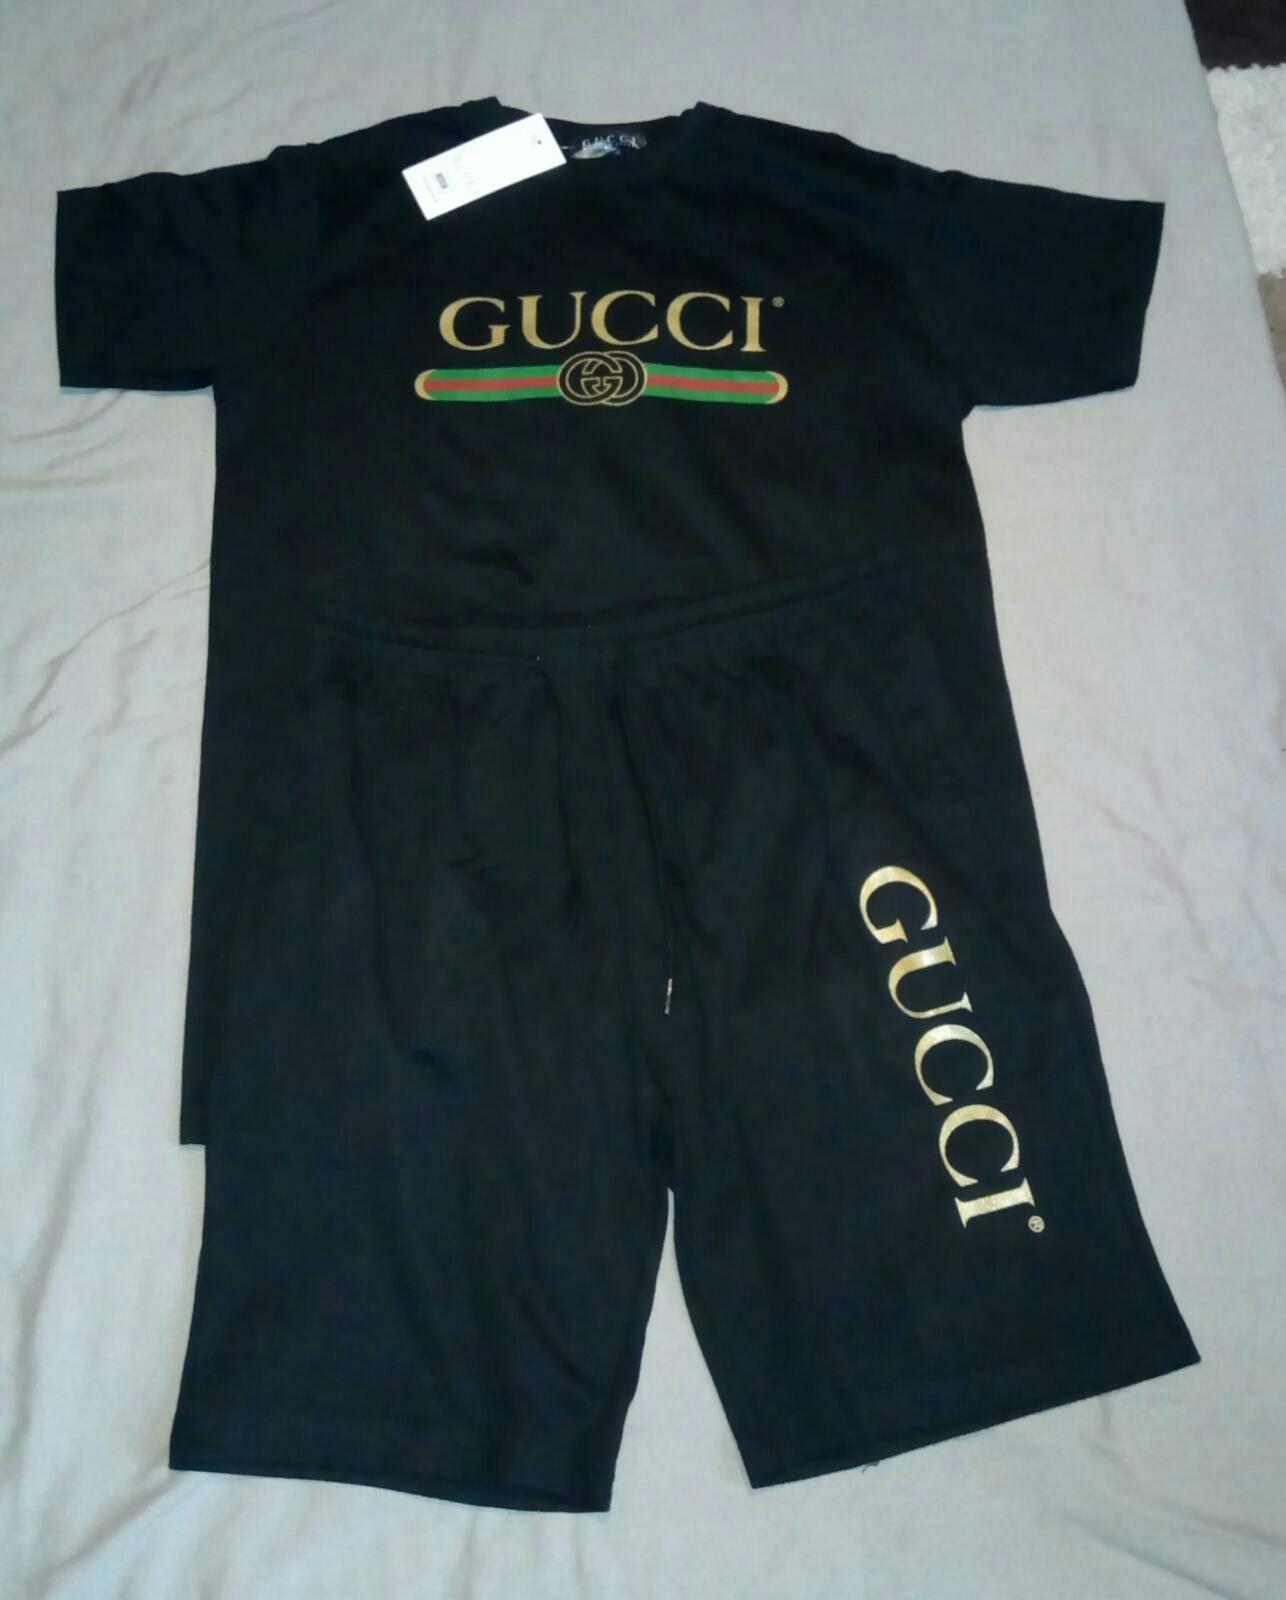 Gucci Clothes For Roblox Buyudum Cocuk Oldum - roblox shirt id boy rldm